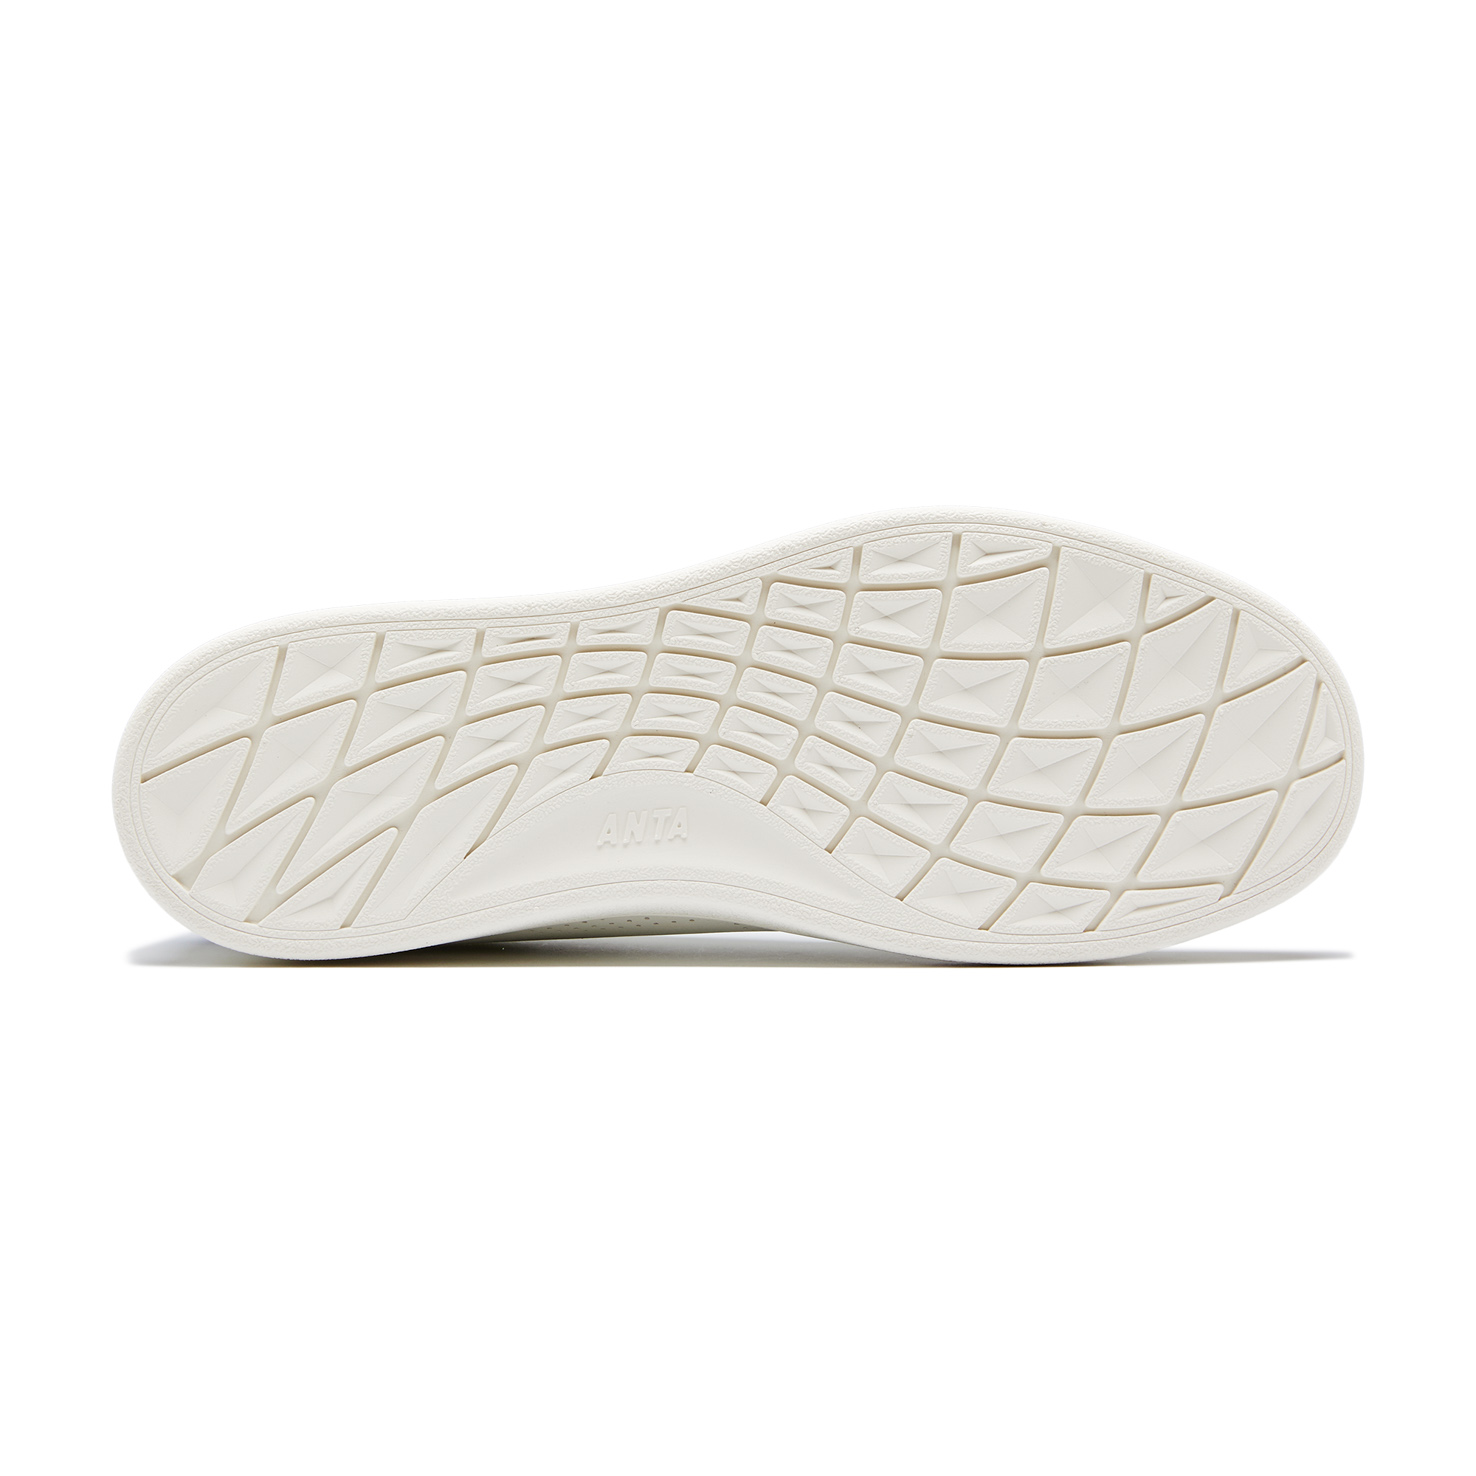 Basic sneakers ANTA, размер 42, цвет белый AN812028062 - фото 6